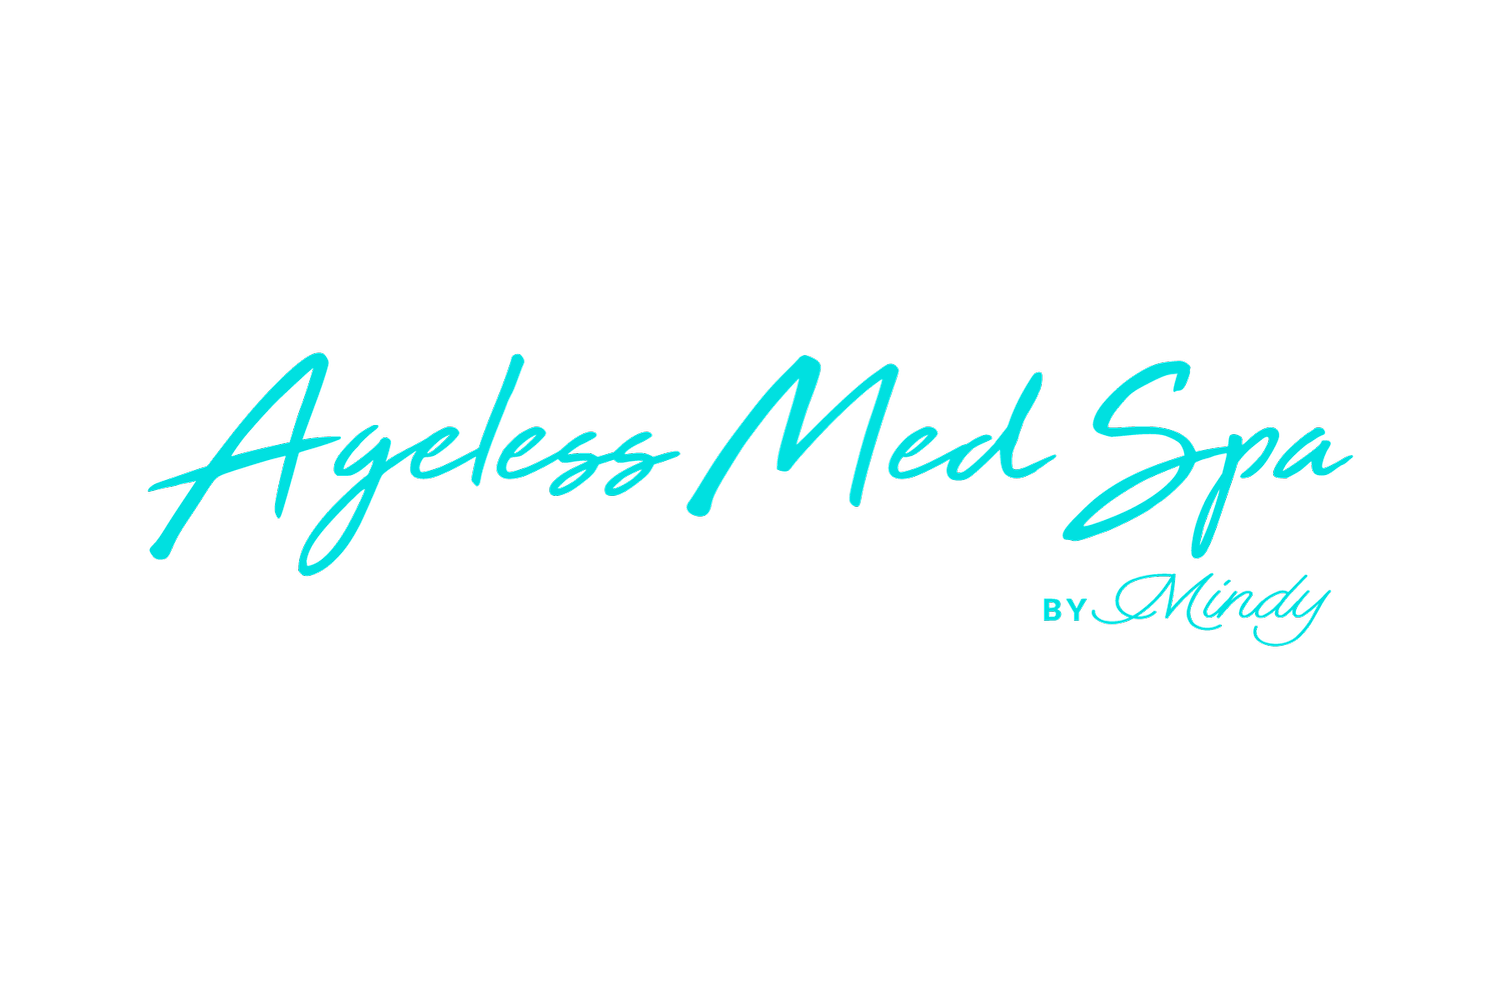 Ageless Med Spa by Mindy